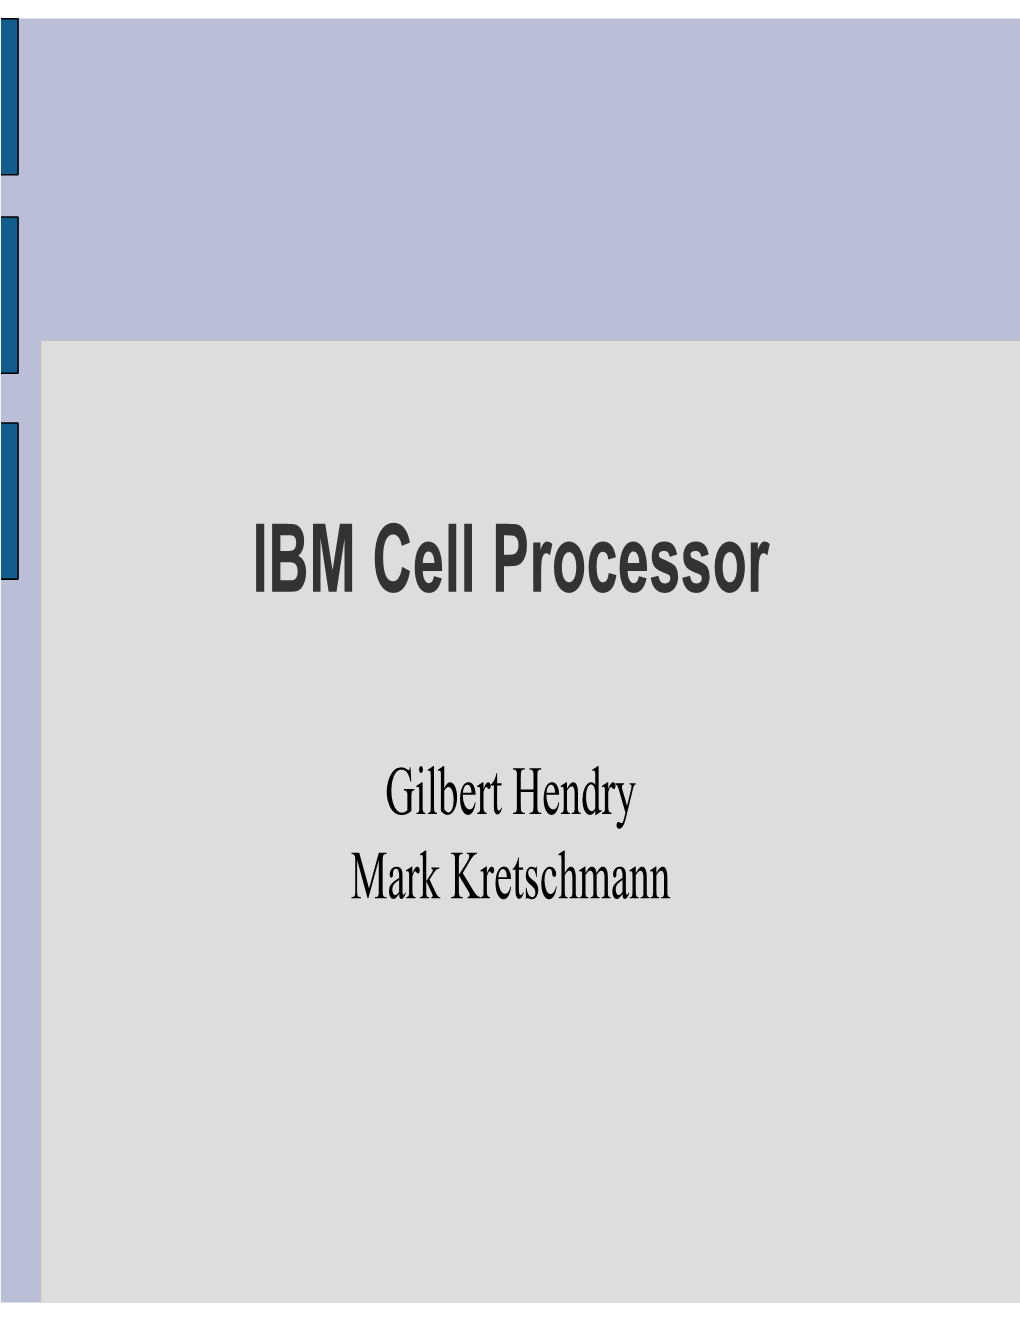 IBM Cell Processor